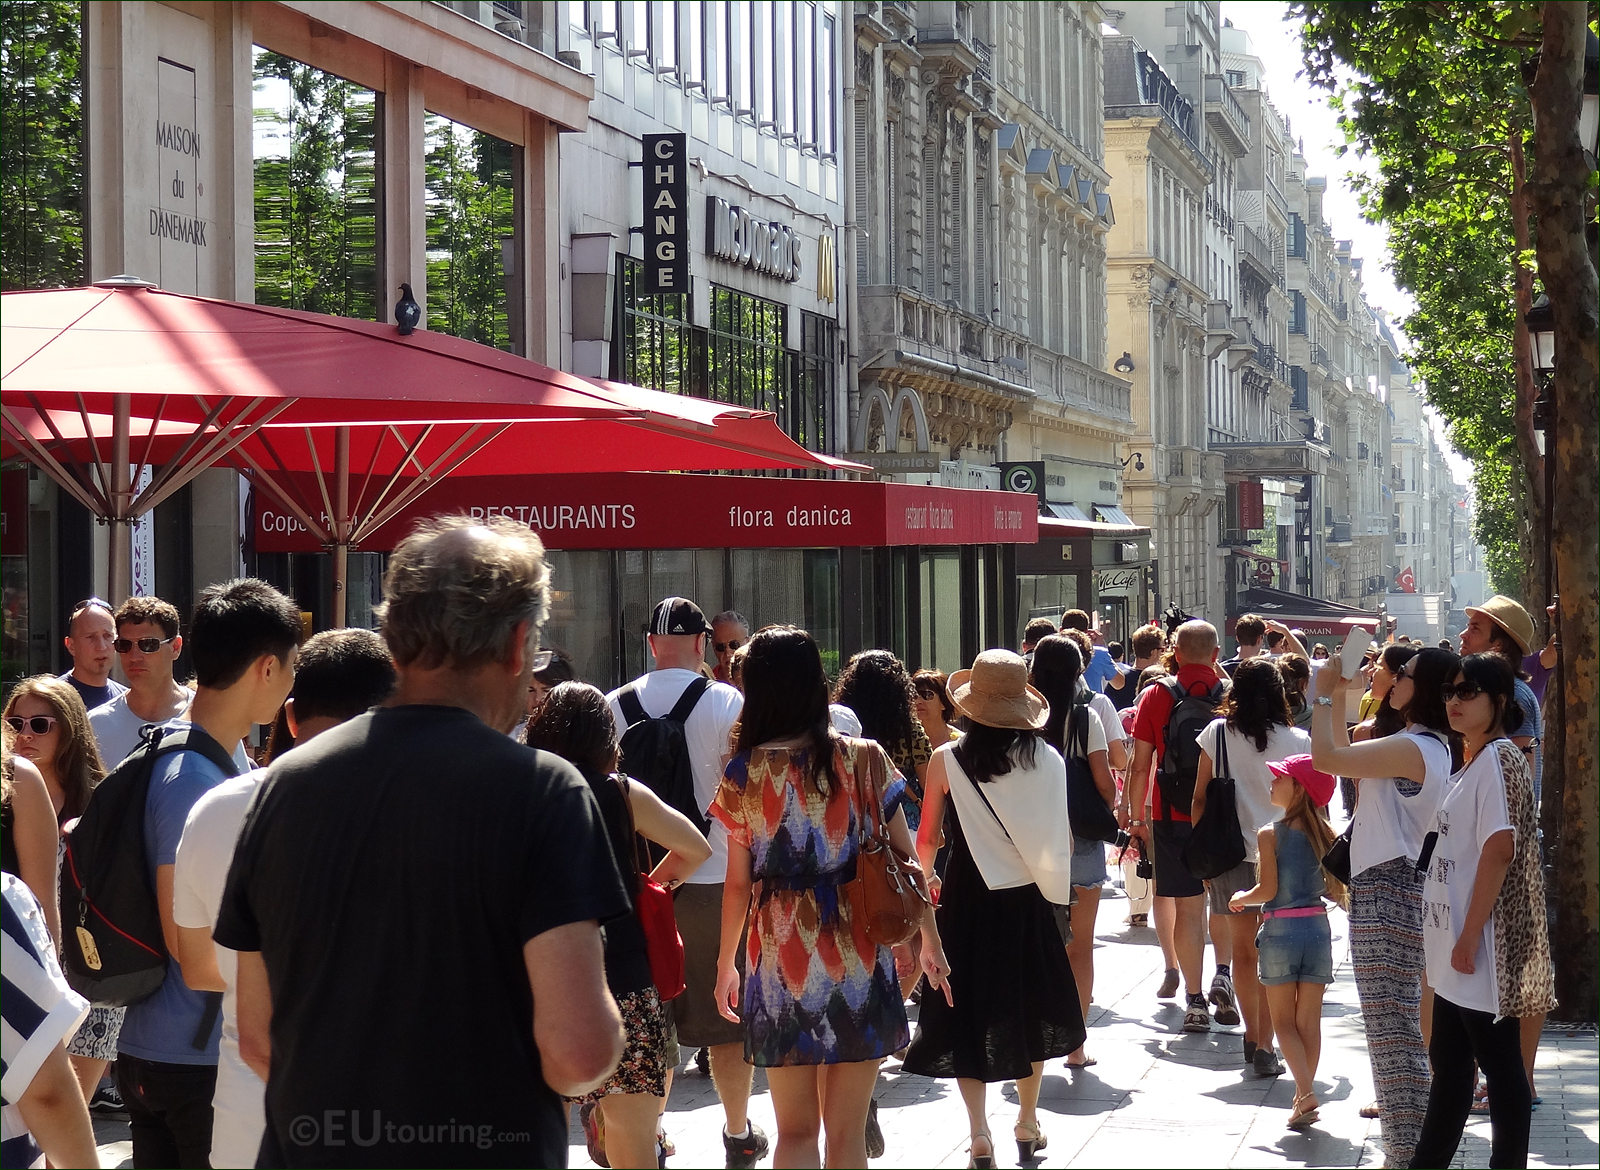 7,600+ Avenue Des Champs Elysees Stock Photos, Pictures & Royalty